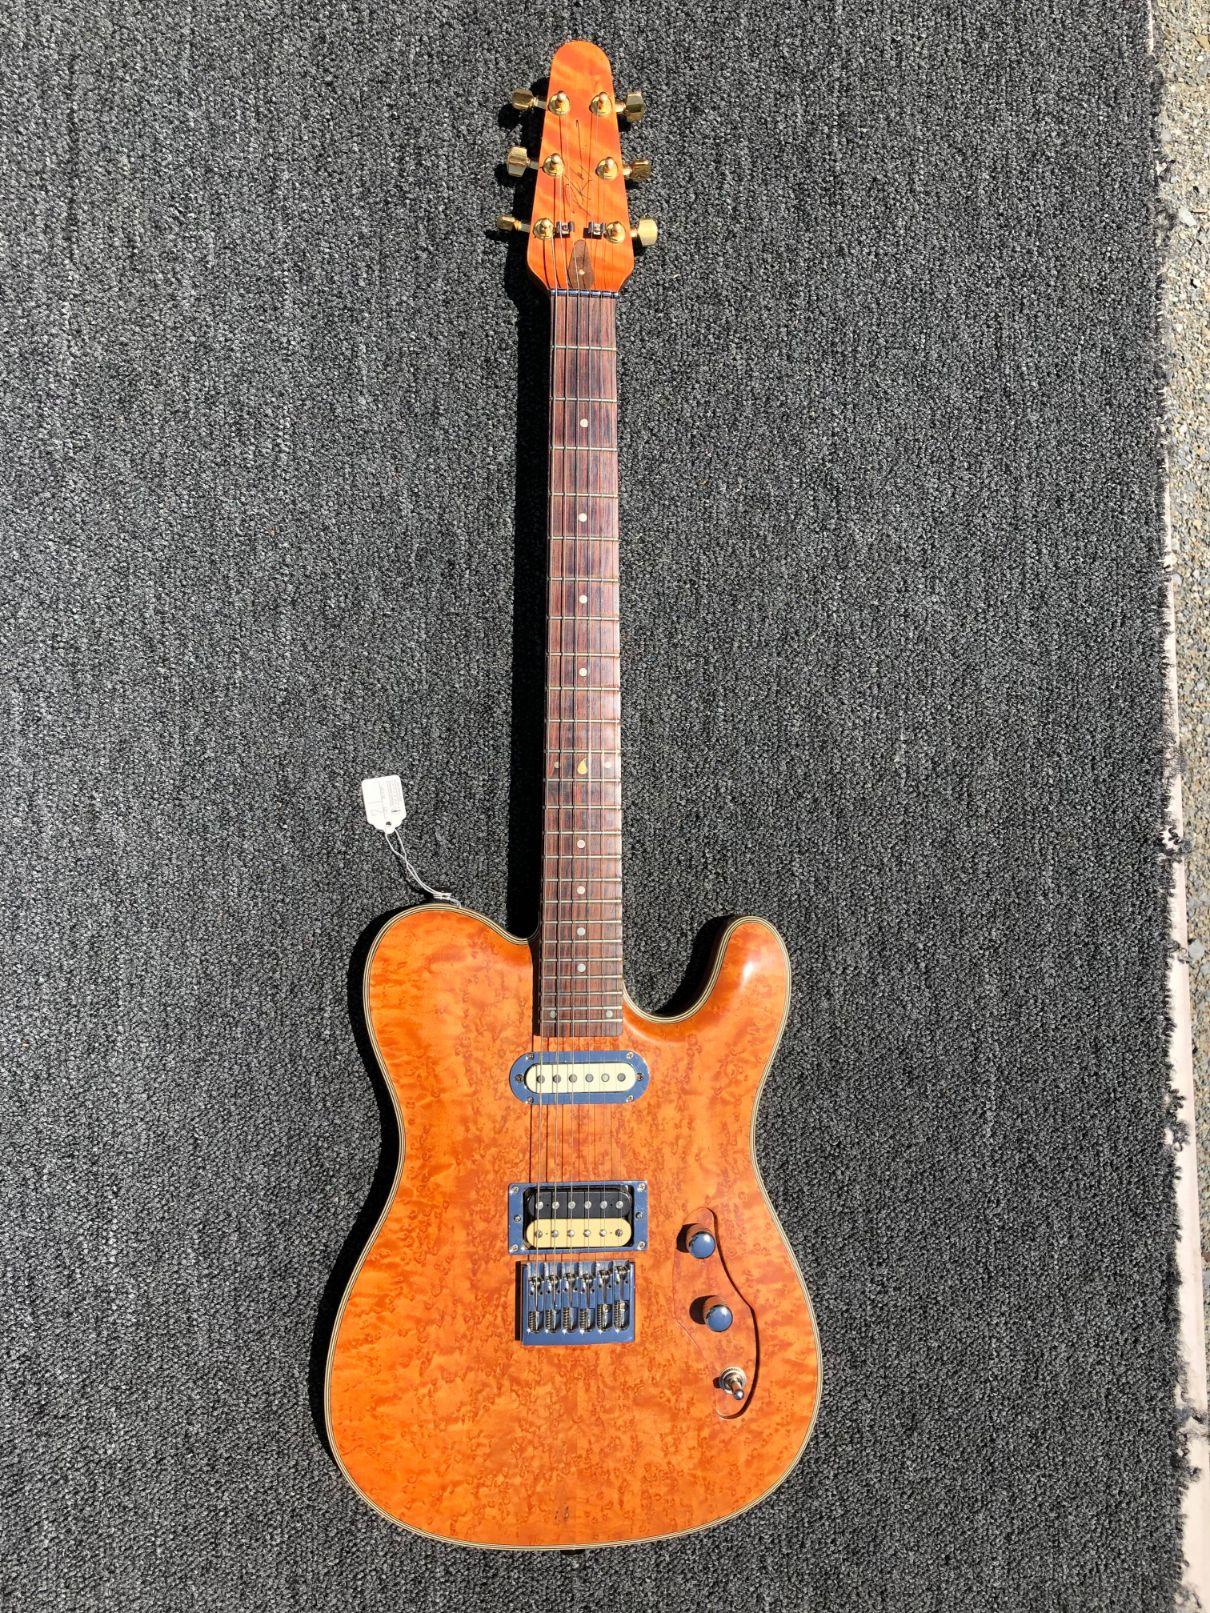 Per Custom Telecaster Style Electric Guitar